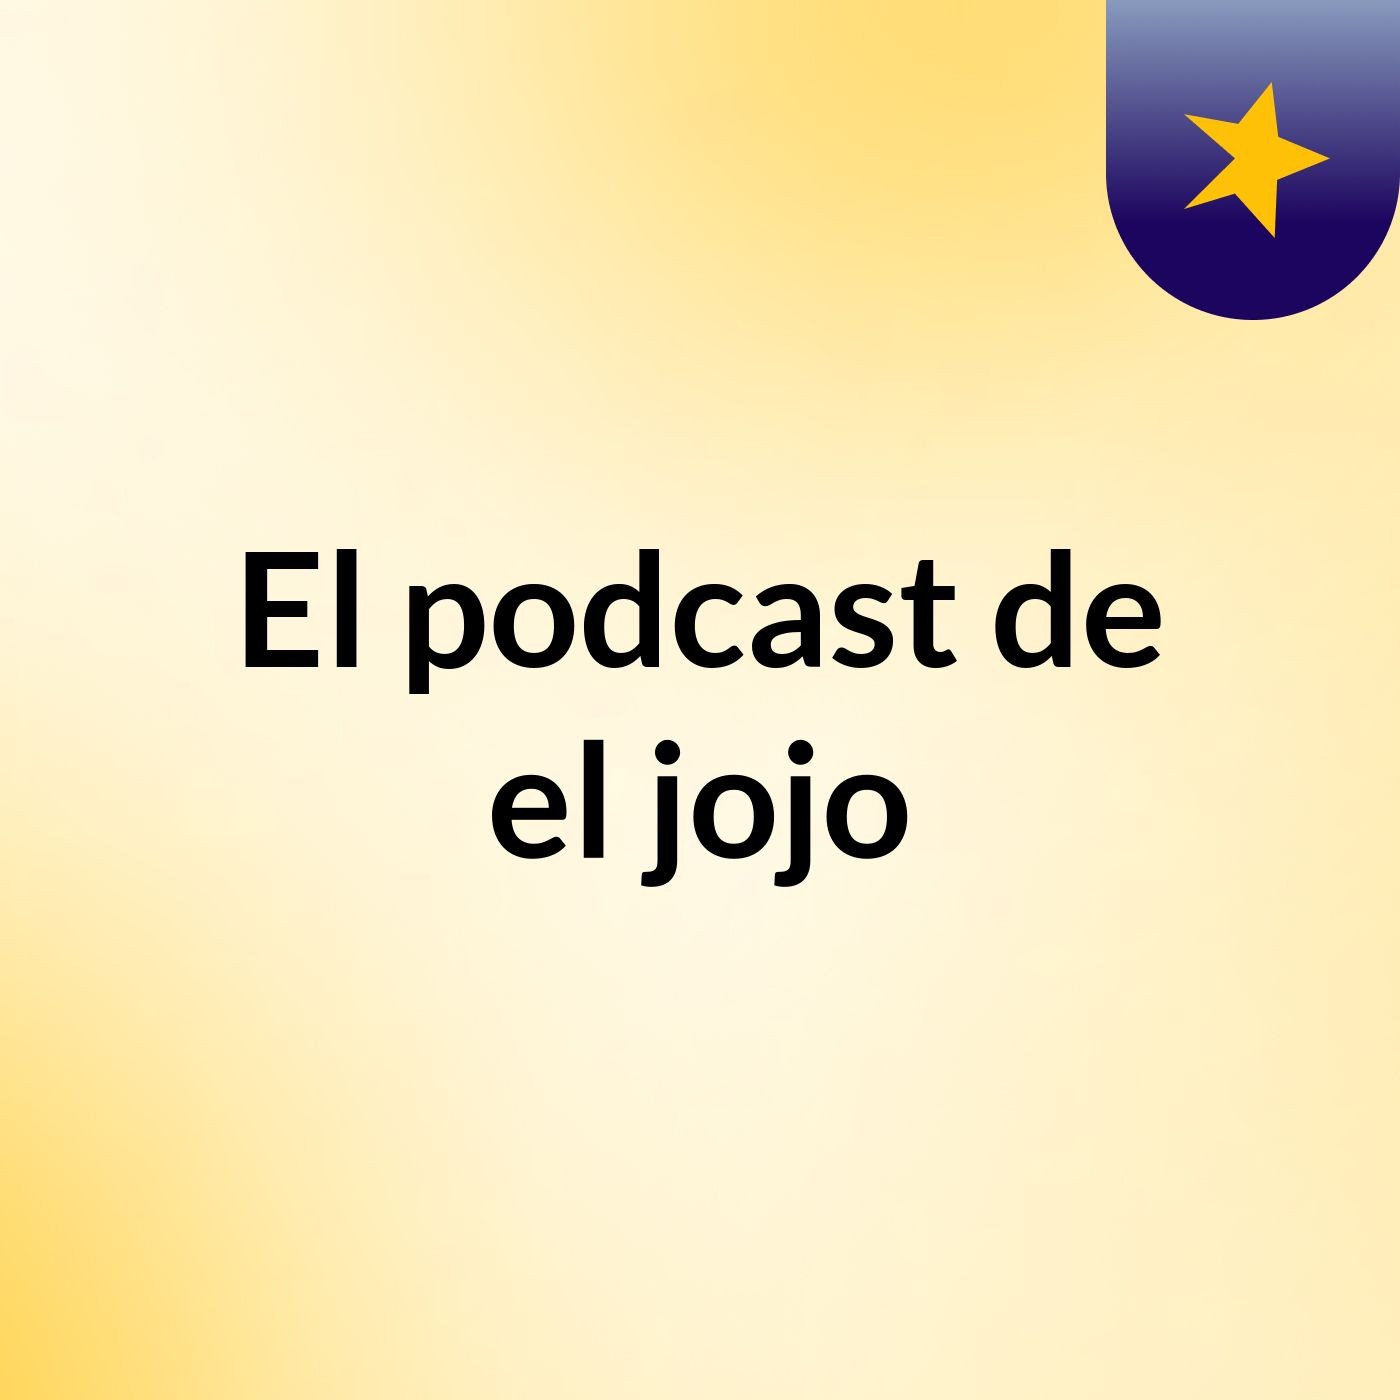 El podcast de el jojo